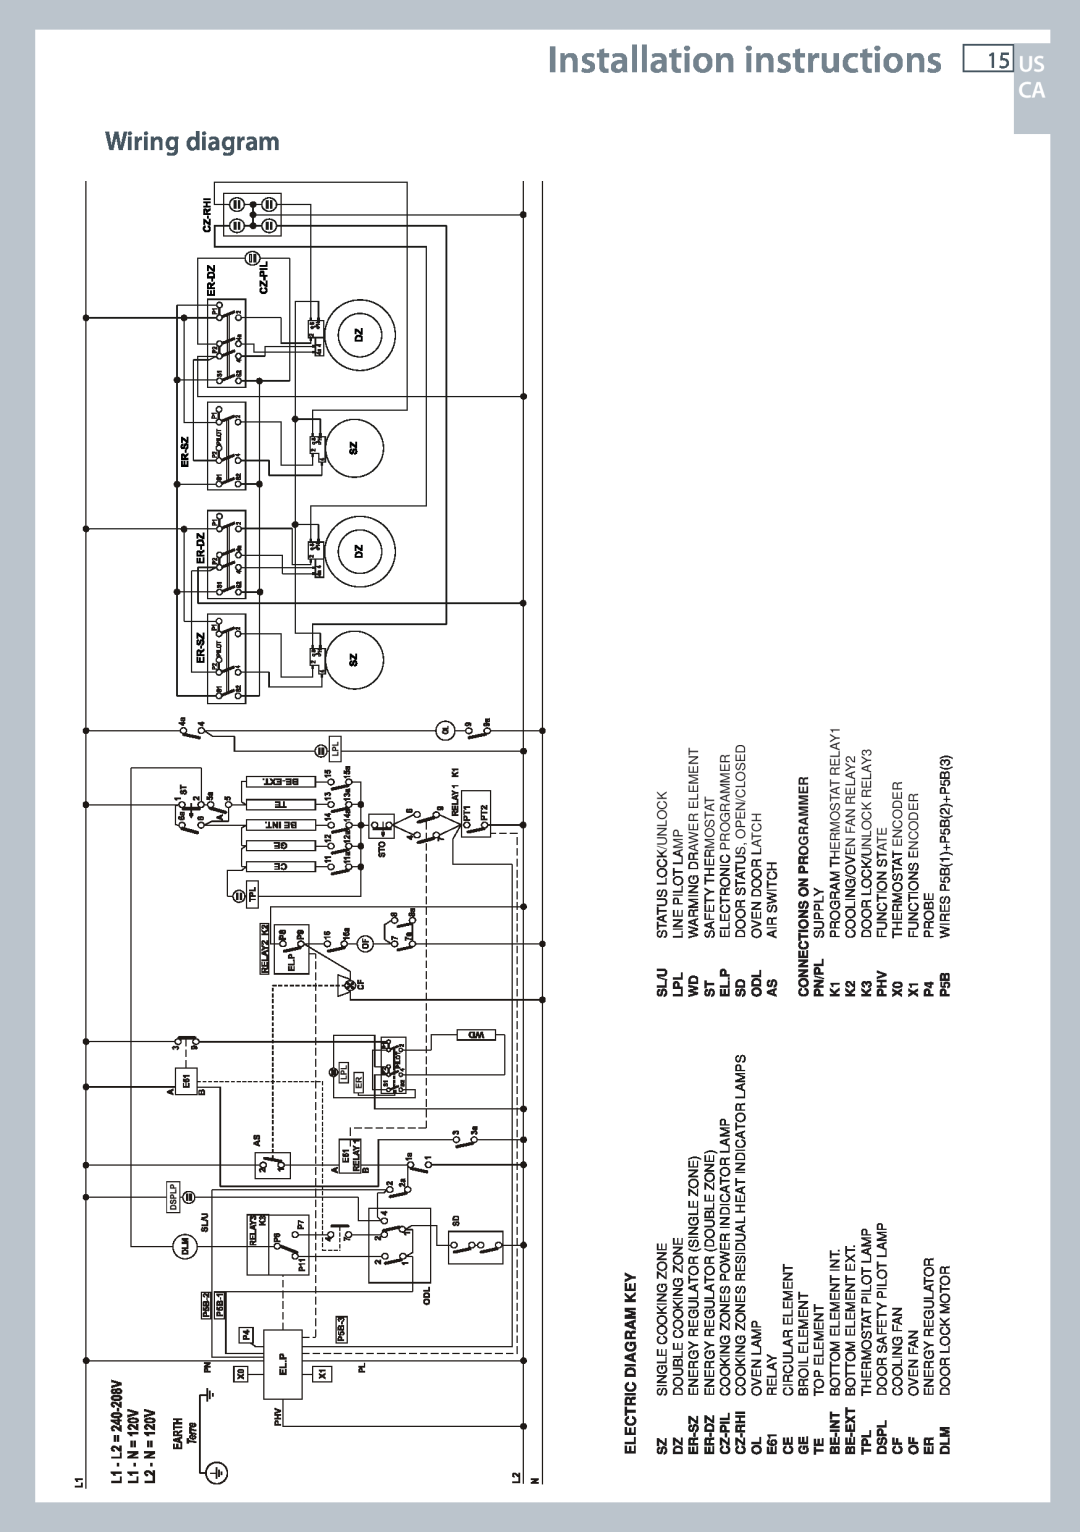 Fisher & Paykel OR305SDPWSX Installation instructions 15 US, Wiring diagram, Electric Diagram Key, Er-Sz, Er-Dz, Cz-Pil 